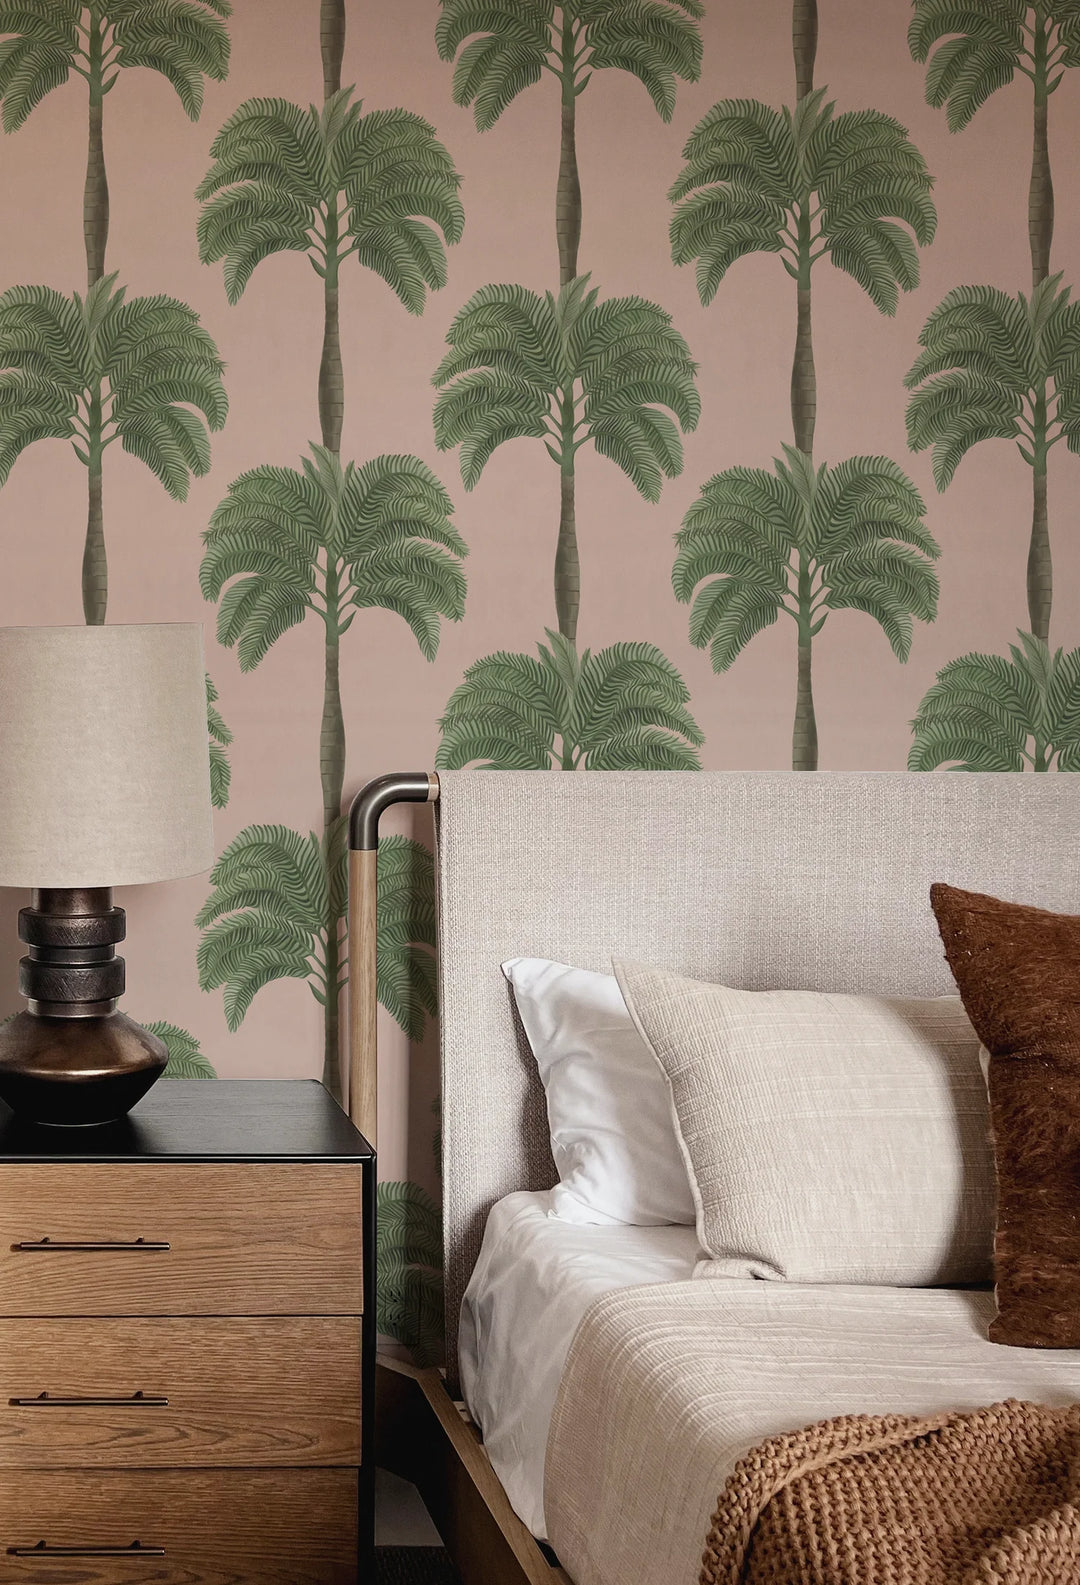 Deus-ex-gardenia-Palma-wallpaper-Palm-tree-repeat-lush-tropical-stripe-flamingo-palm-tree-pink-background-hand-illustrated-wallpaper-pattern